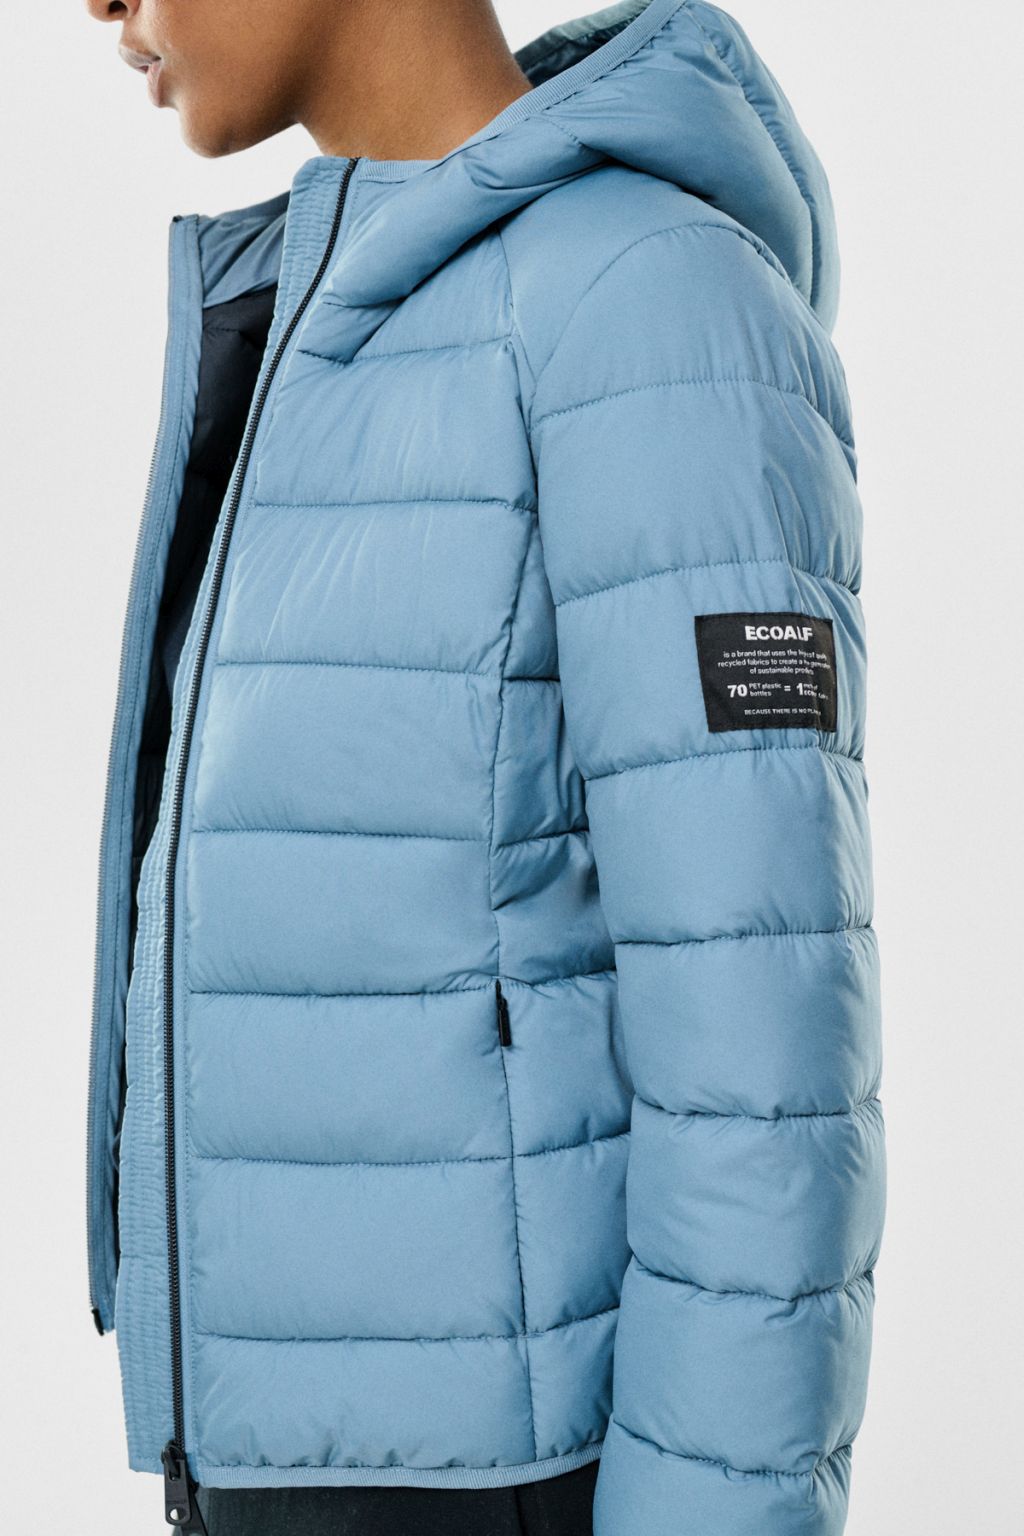 Aspalf Jacket Woman Artic Blue XL